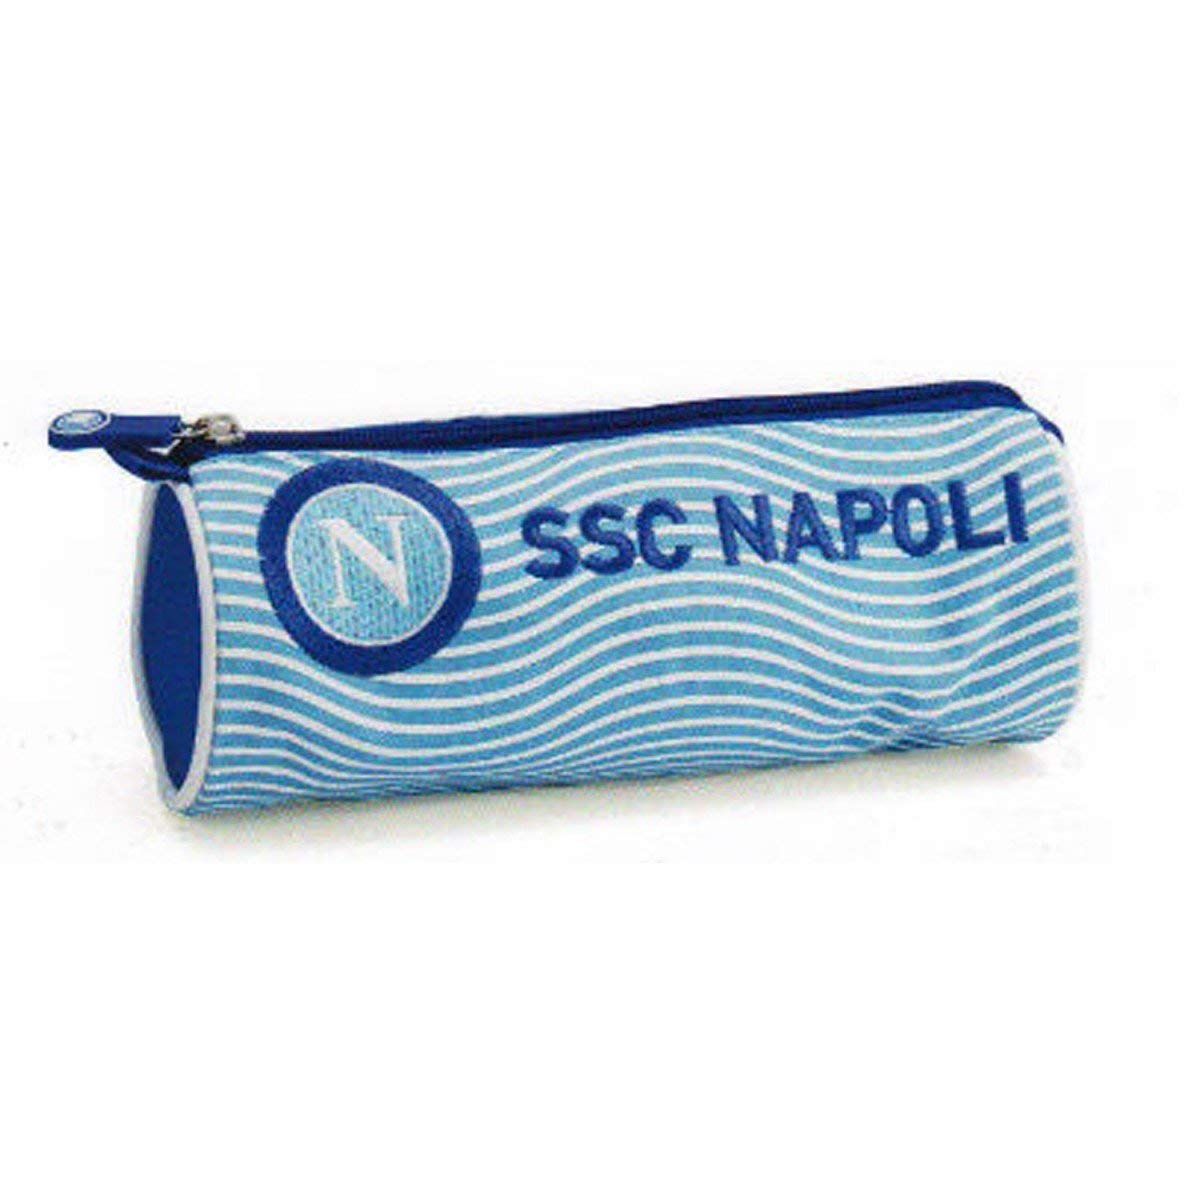 Gadget SSC Napoli. Tombolino scuola